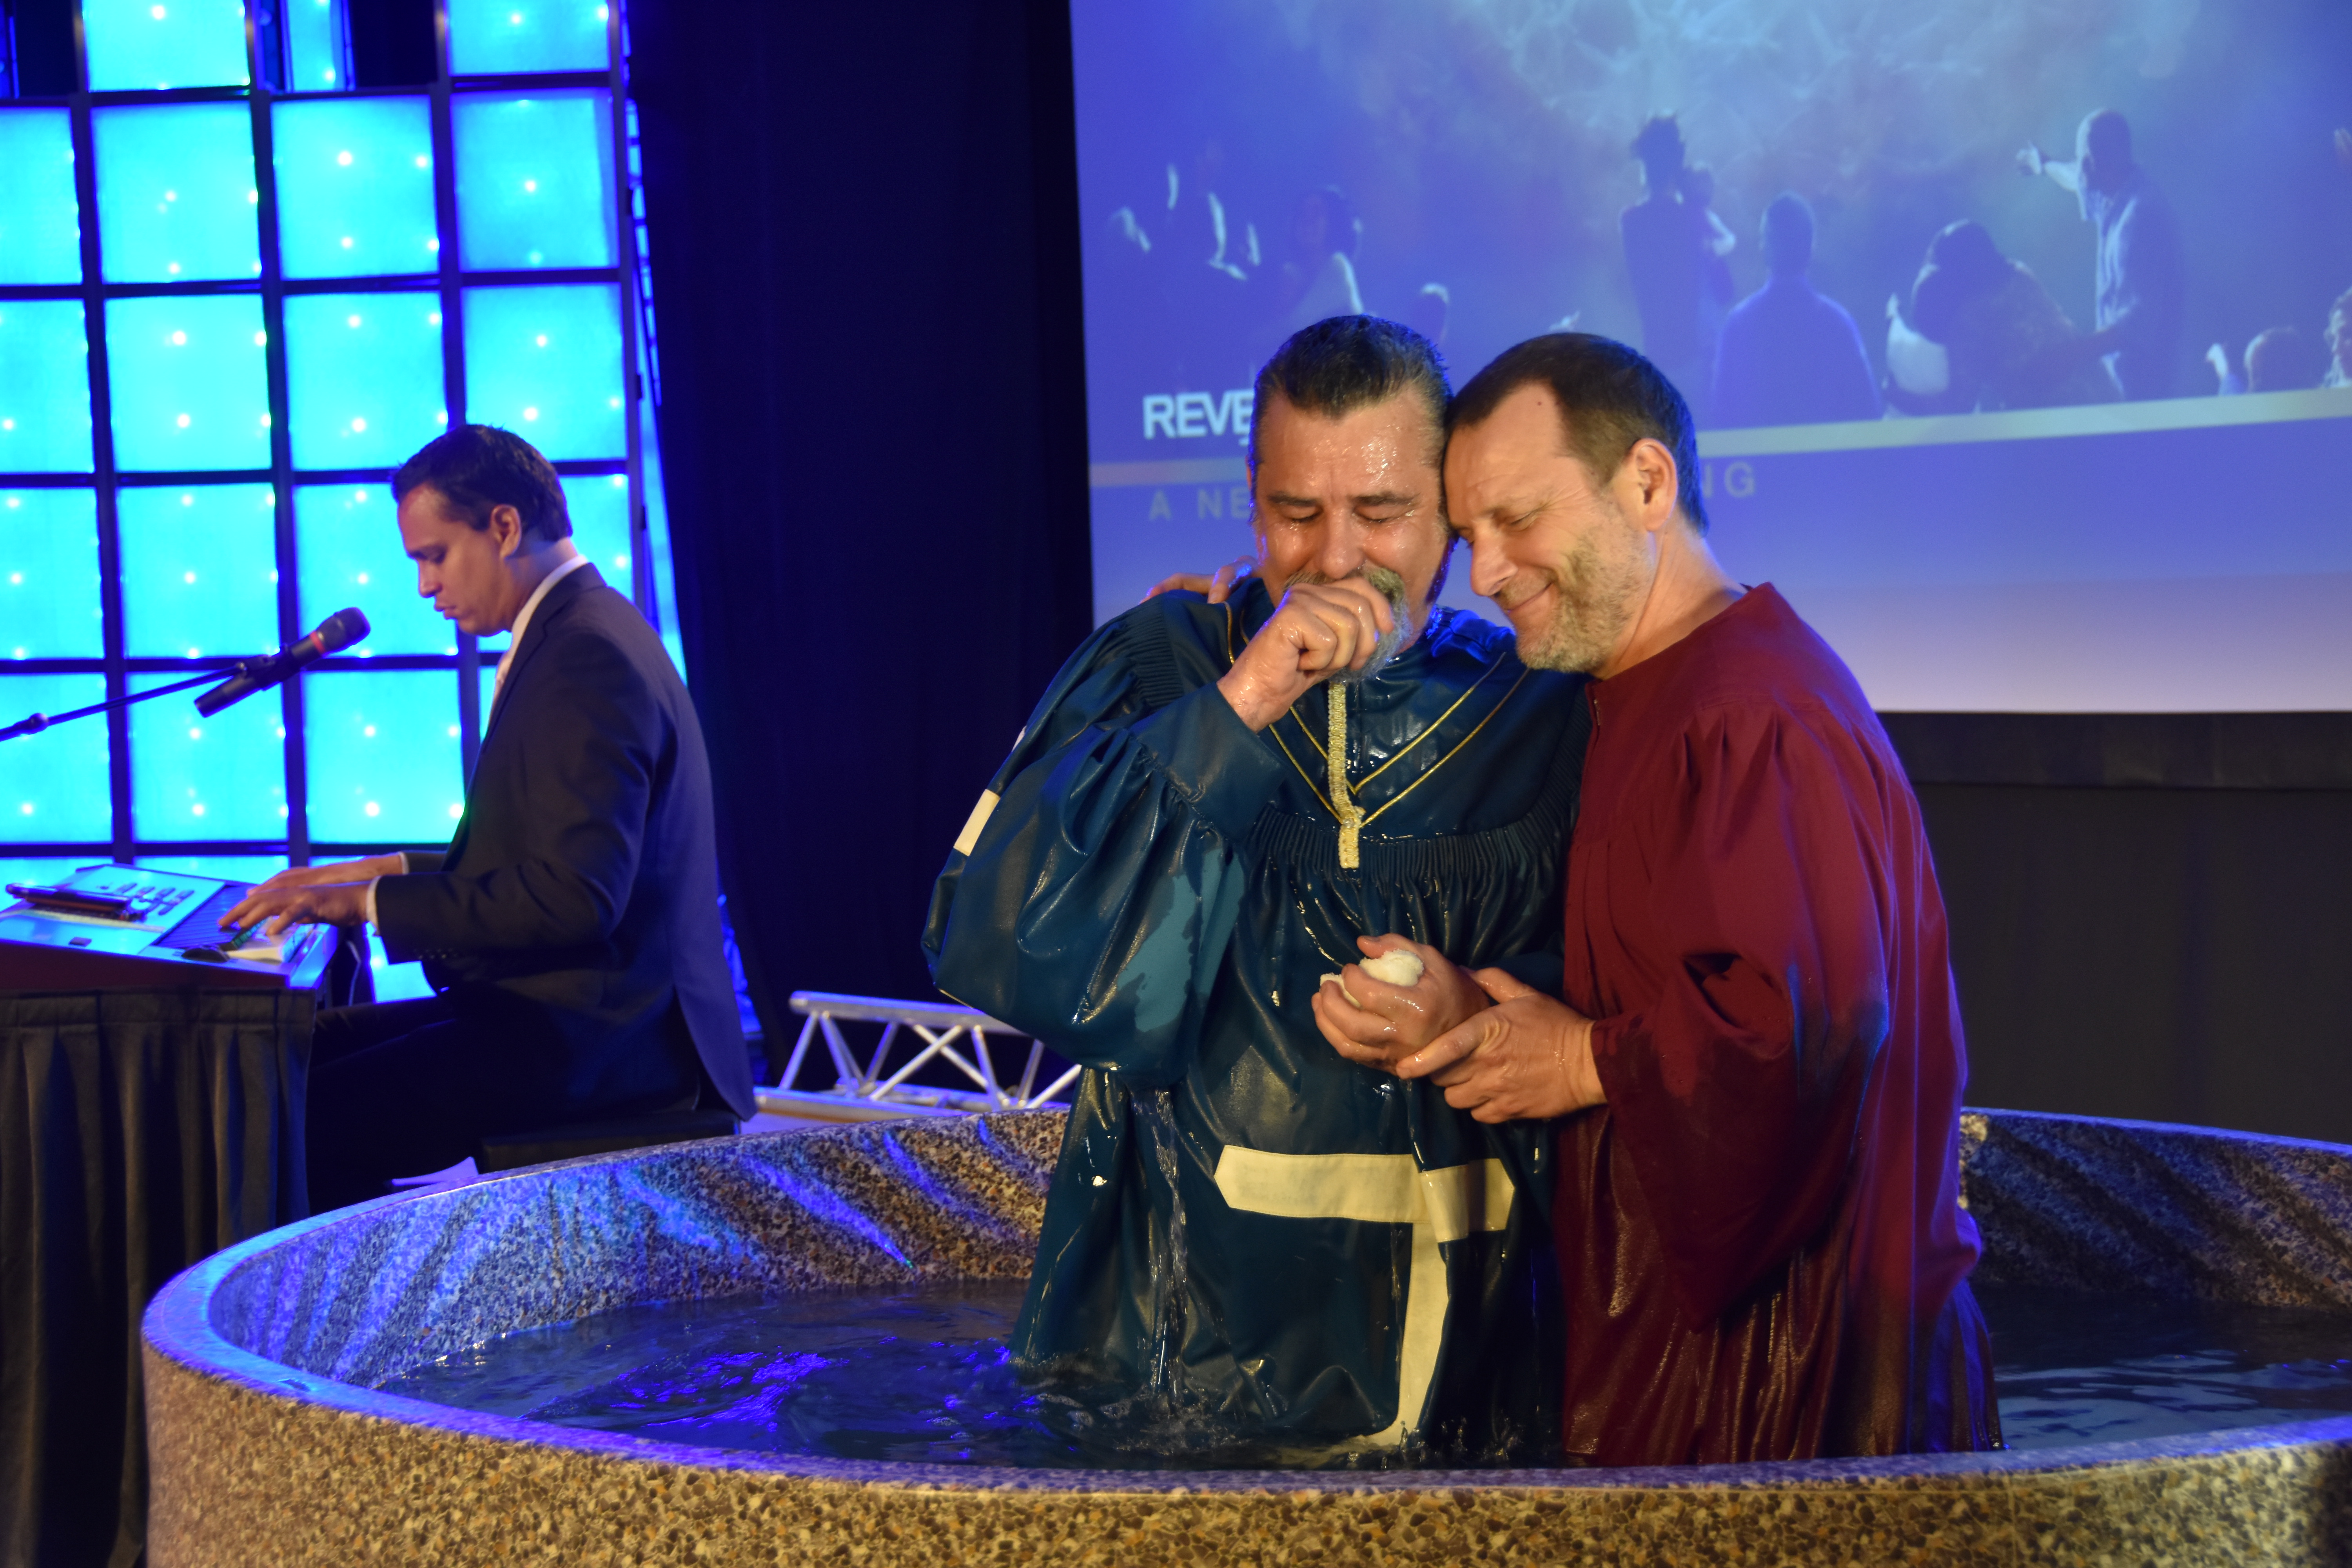 Man baptized at Revelation Today in Kansas City